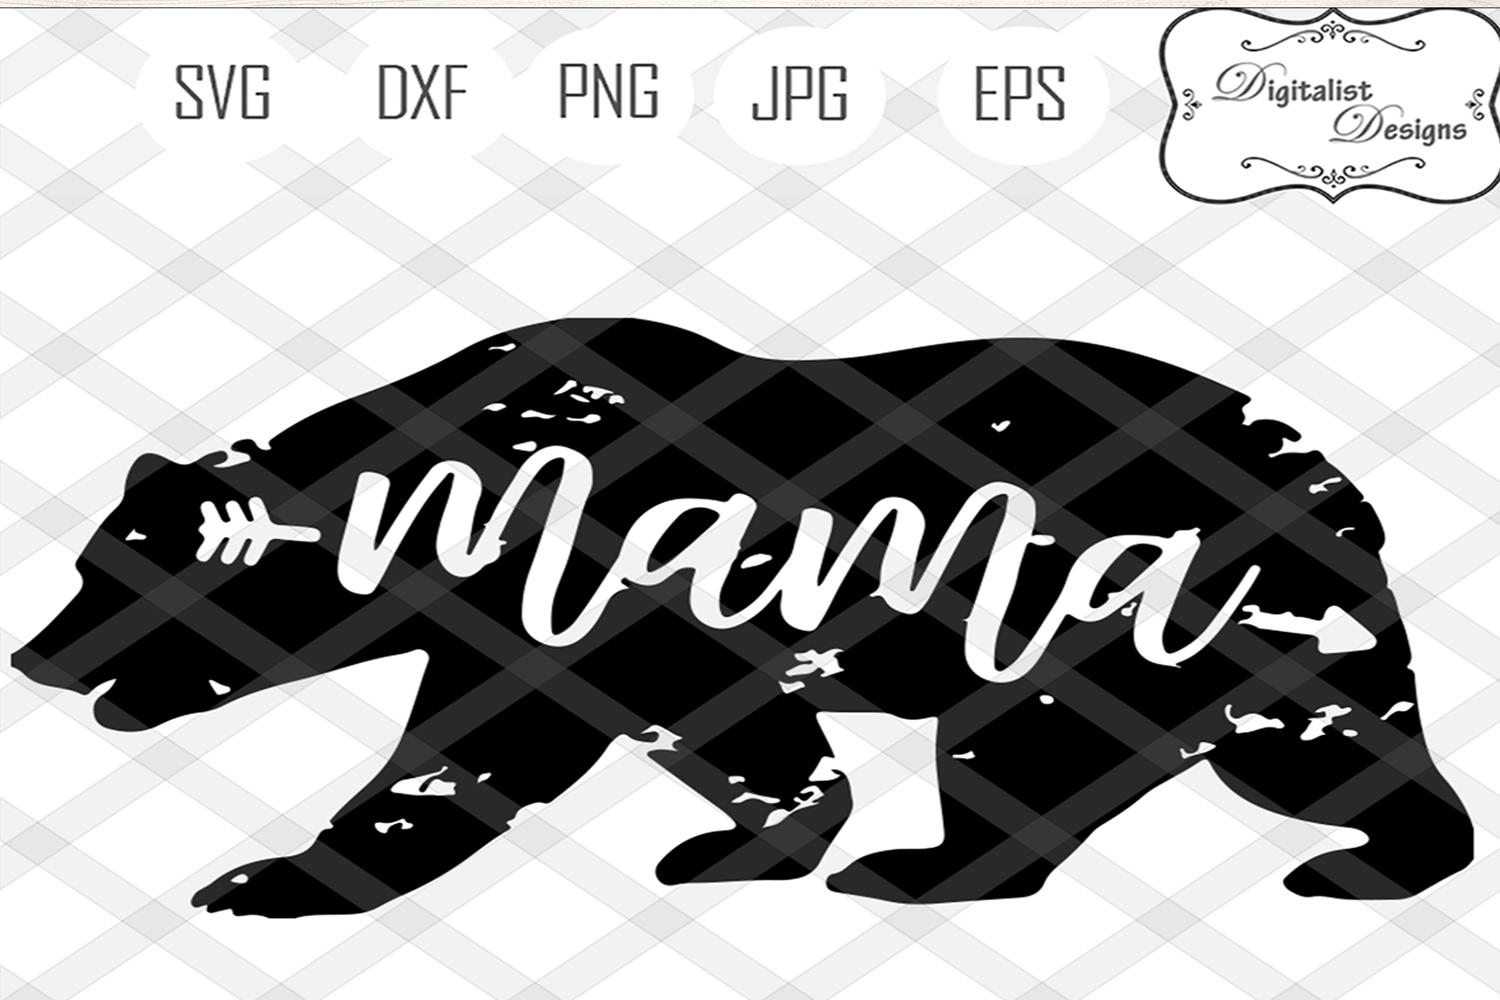 Free Free Svg Mama Bear 875 SVG PNG EPS DXF File